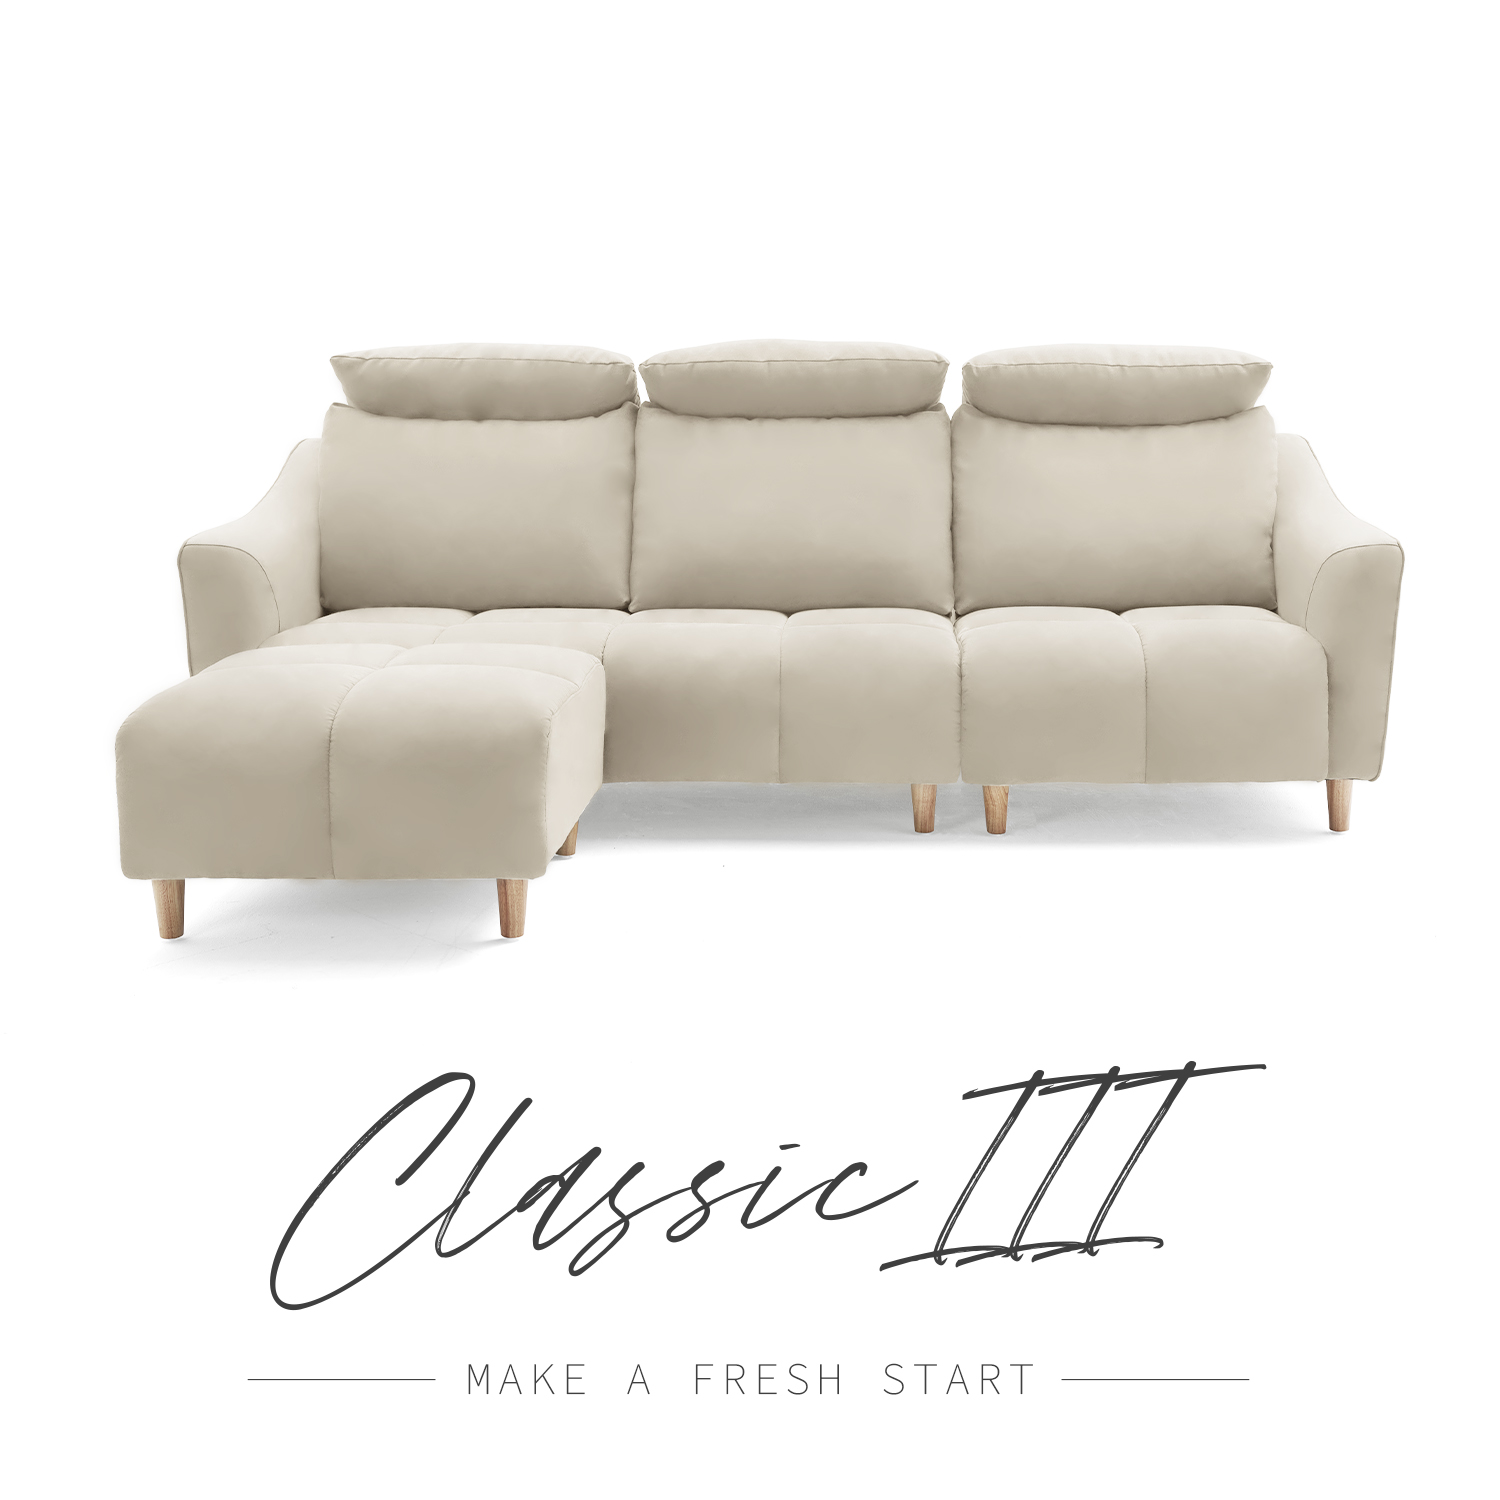 Classic III-冰峰涼感系列L型沙發/三人座腳凳/頭枕靠枕可拆洗